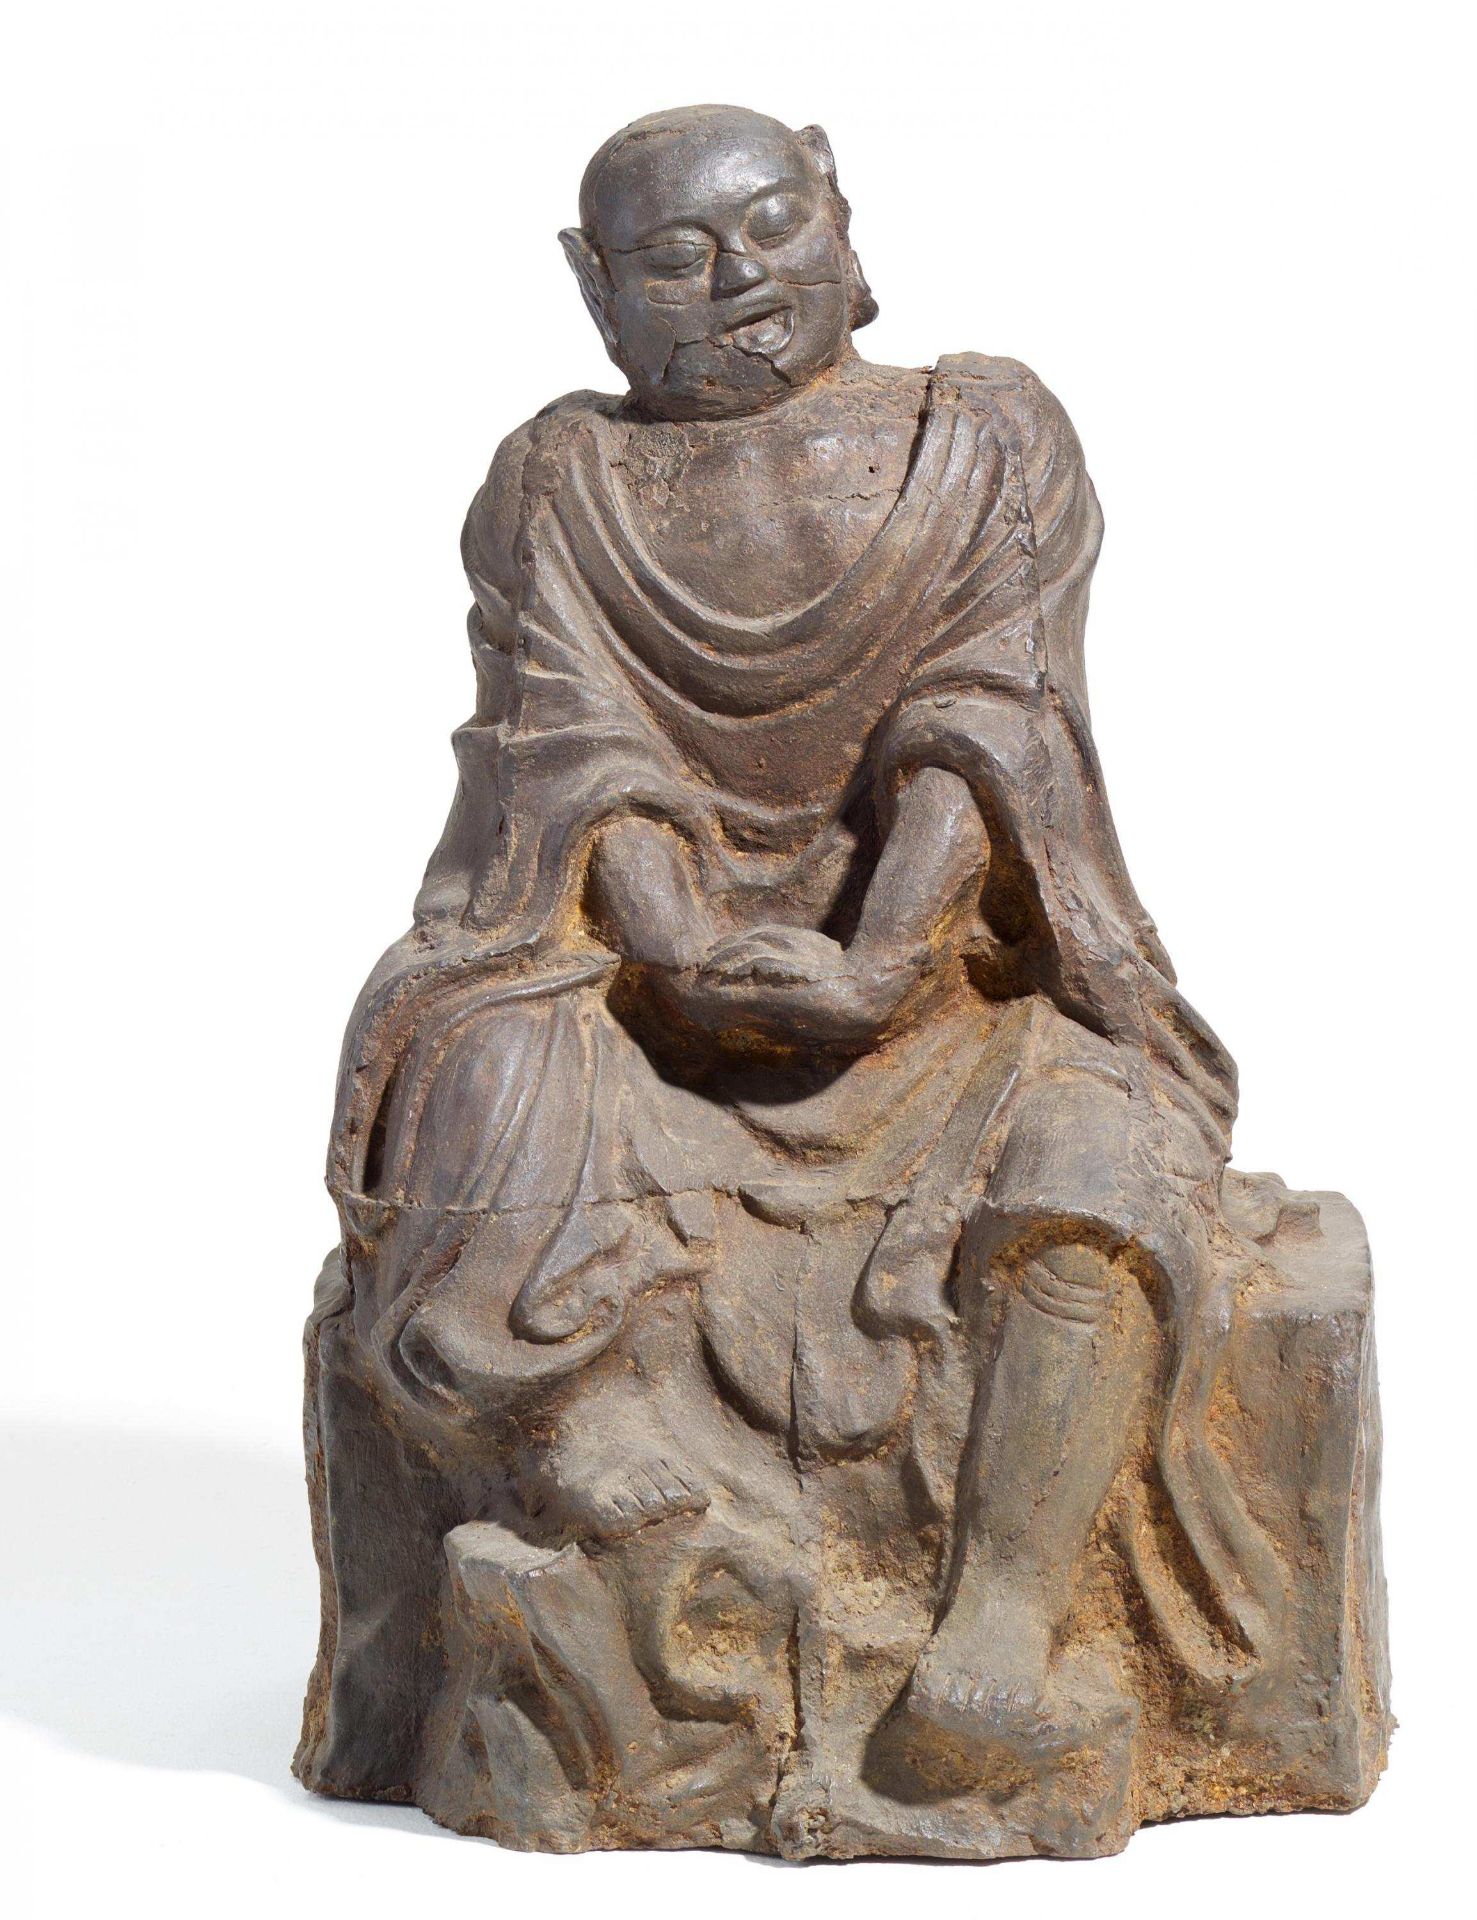 LUOHAN SOBINDA SONJA. China. Probably Yuan dynasty (1279-1368). The Luohan Sobinda Sonja is mostly